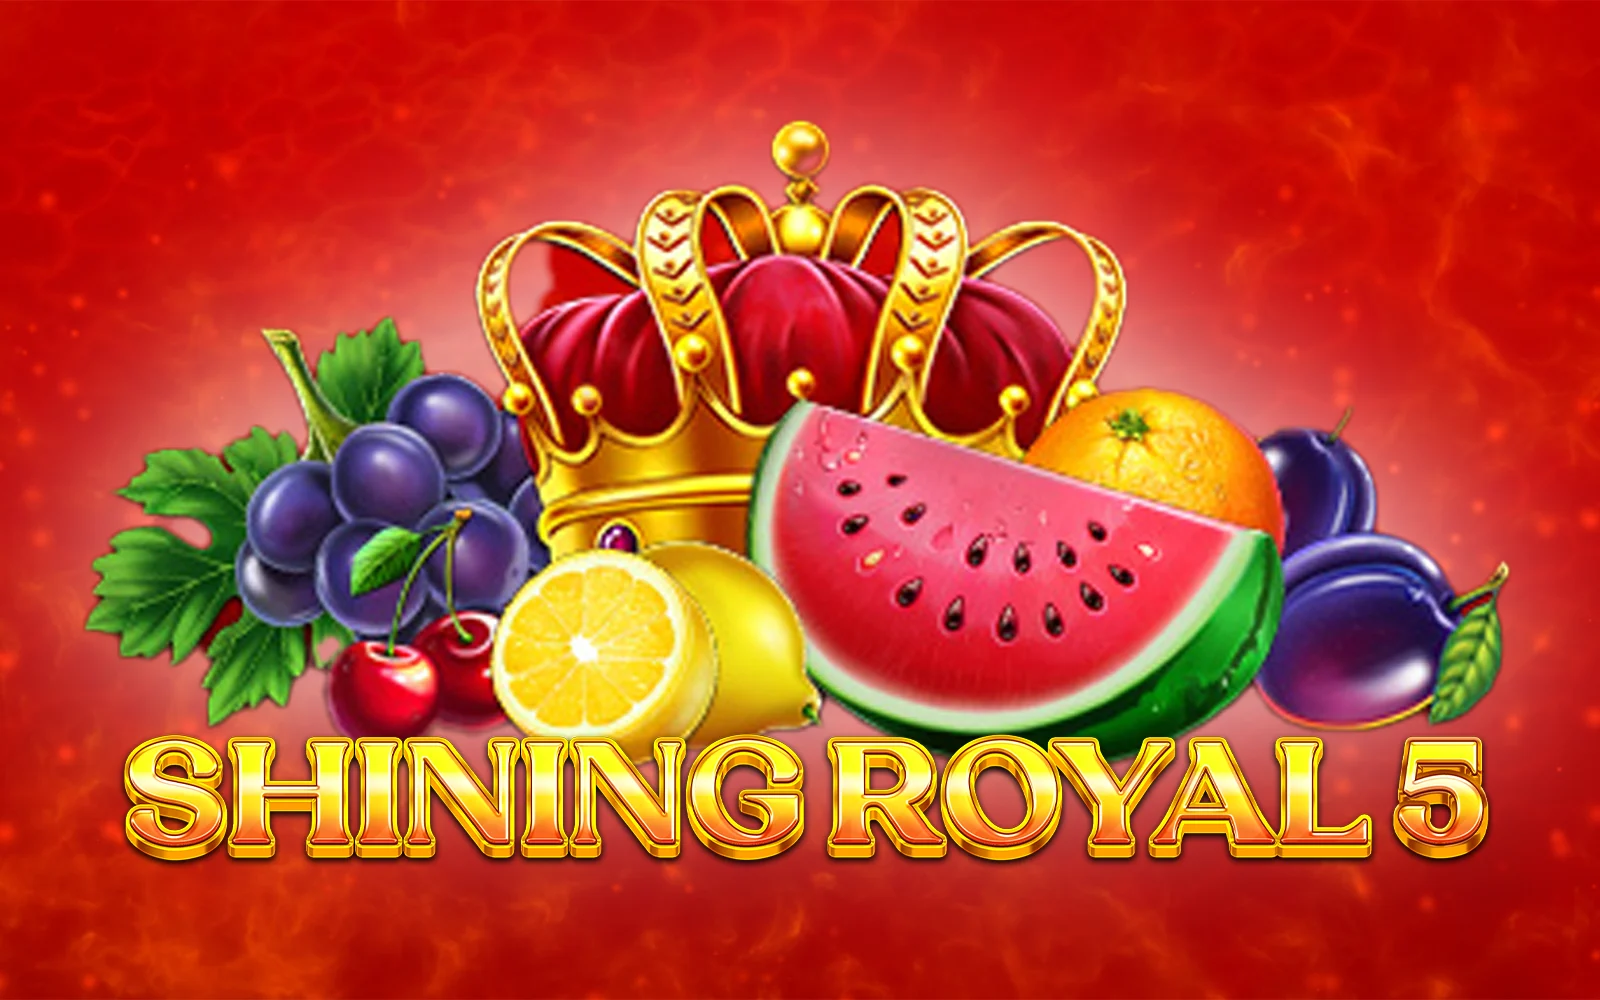 Joacă Shining Royal 5 în cazinoul online Starcasino.be